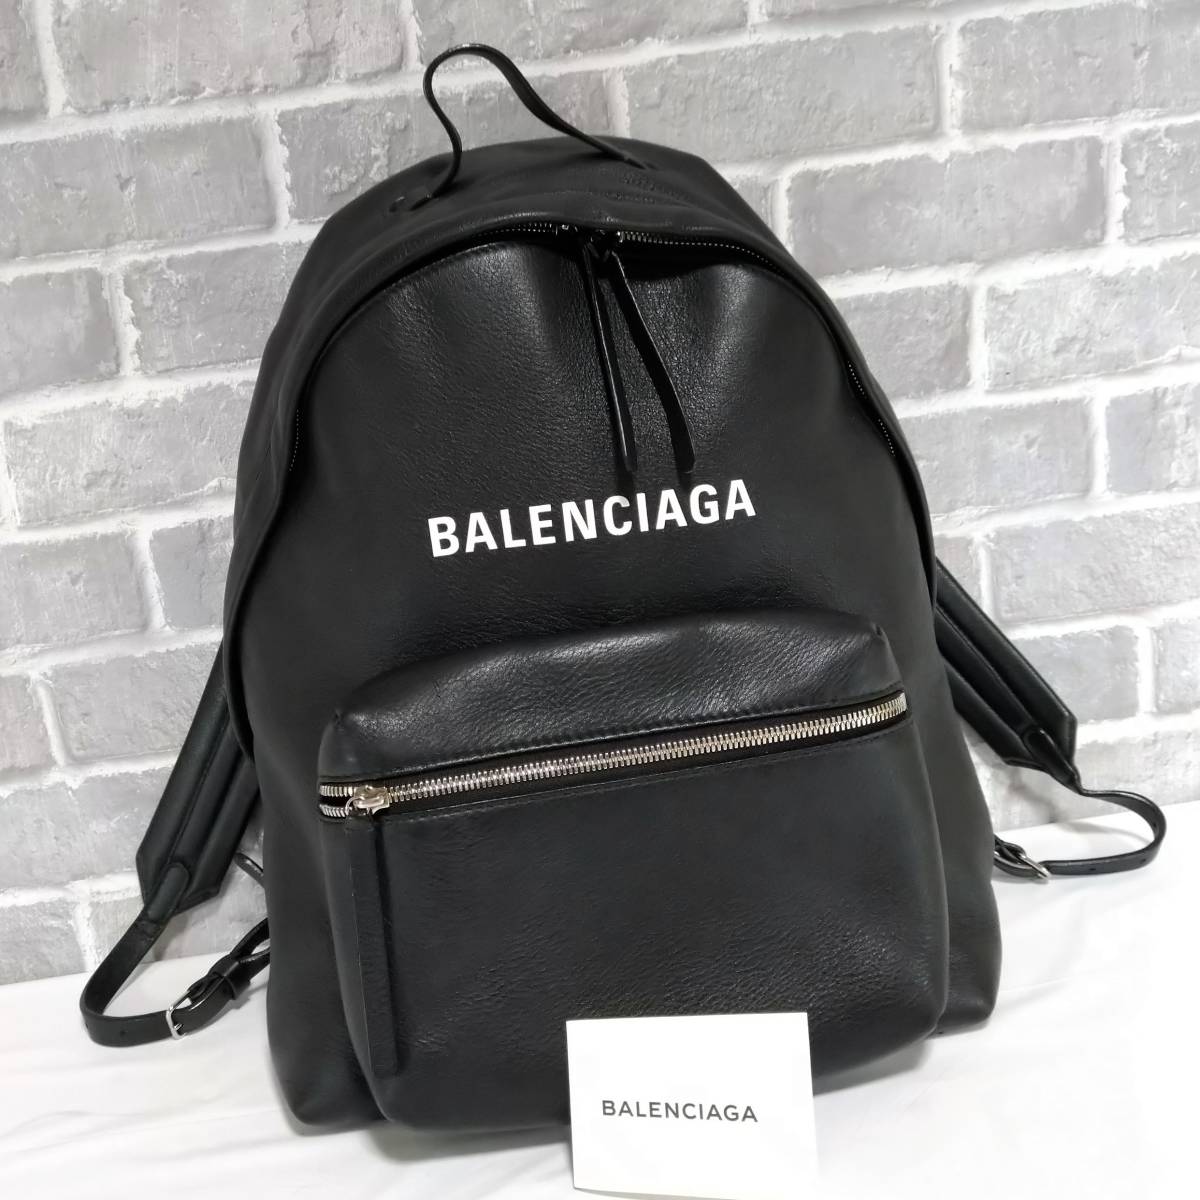 BALENCIAGA バレンシアガ 黒 革製バッグ リュック うファッション 